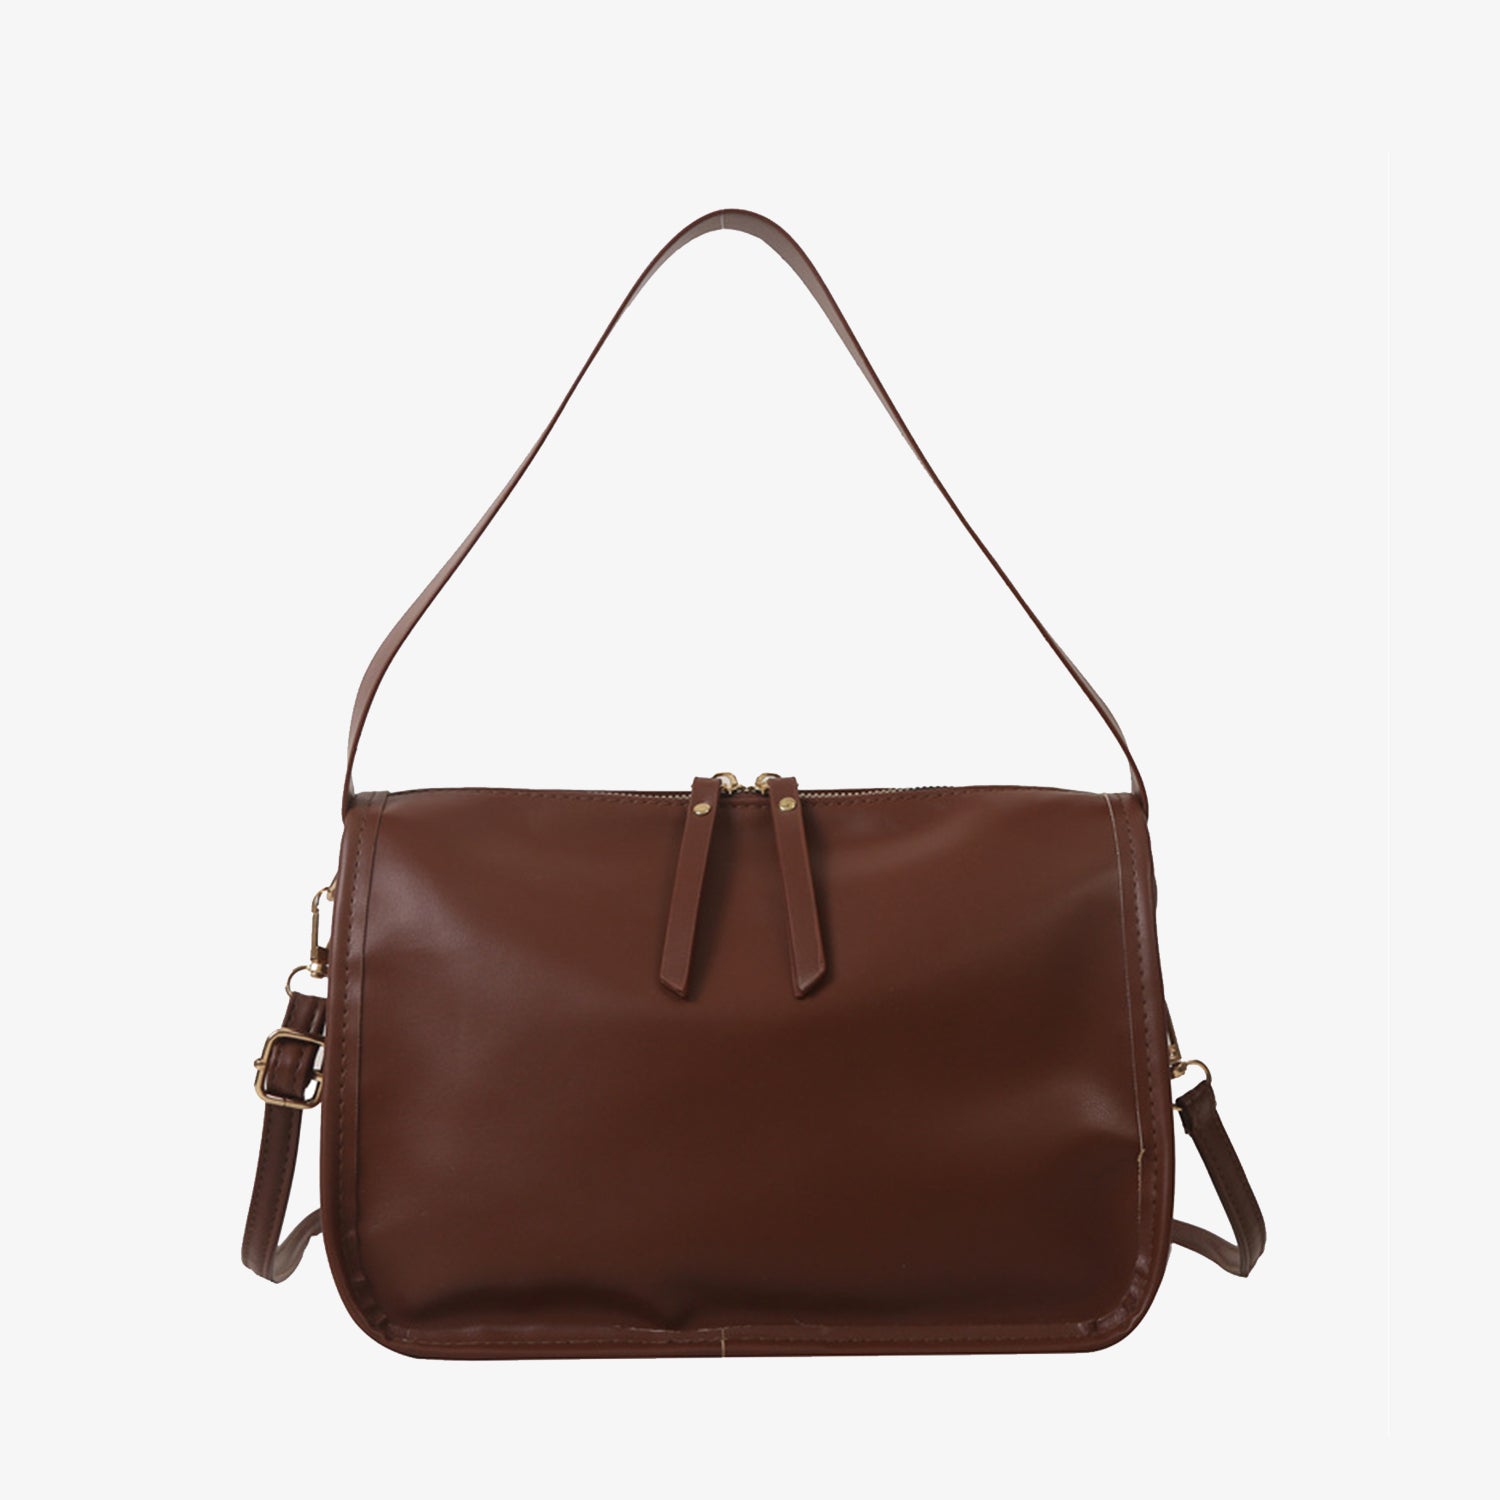 PU Leather Shoulder Bag Brown One Size